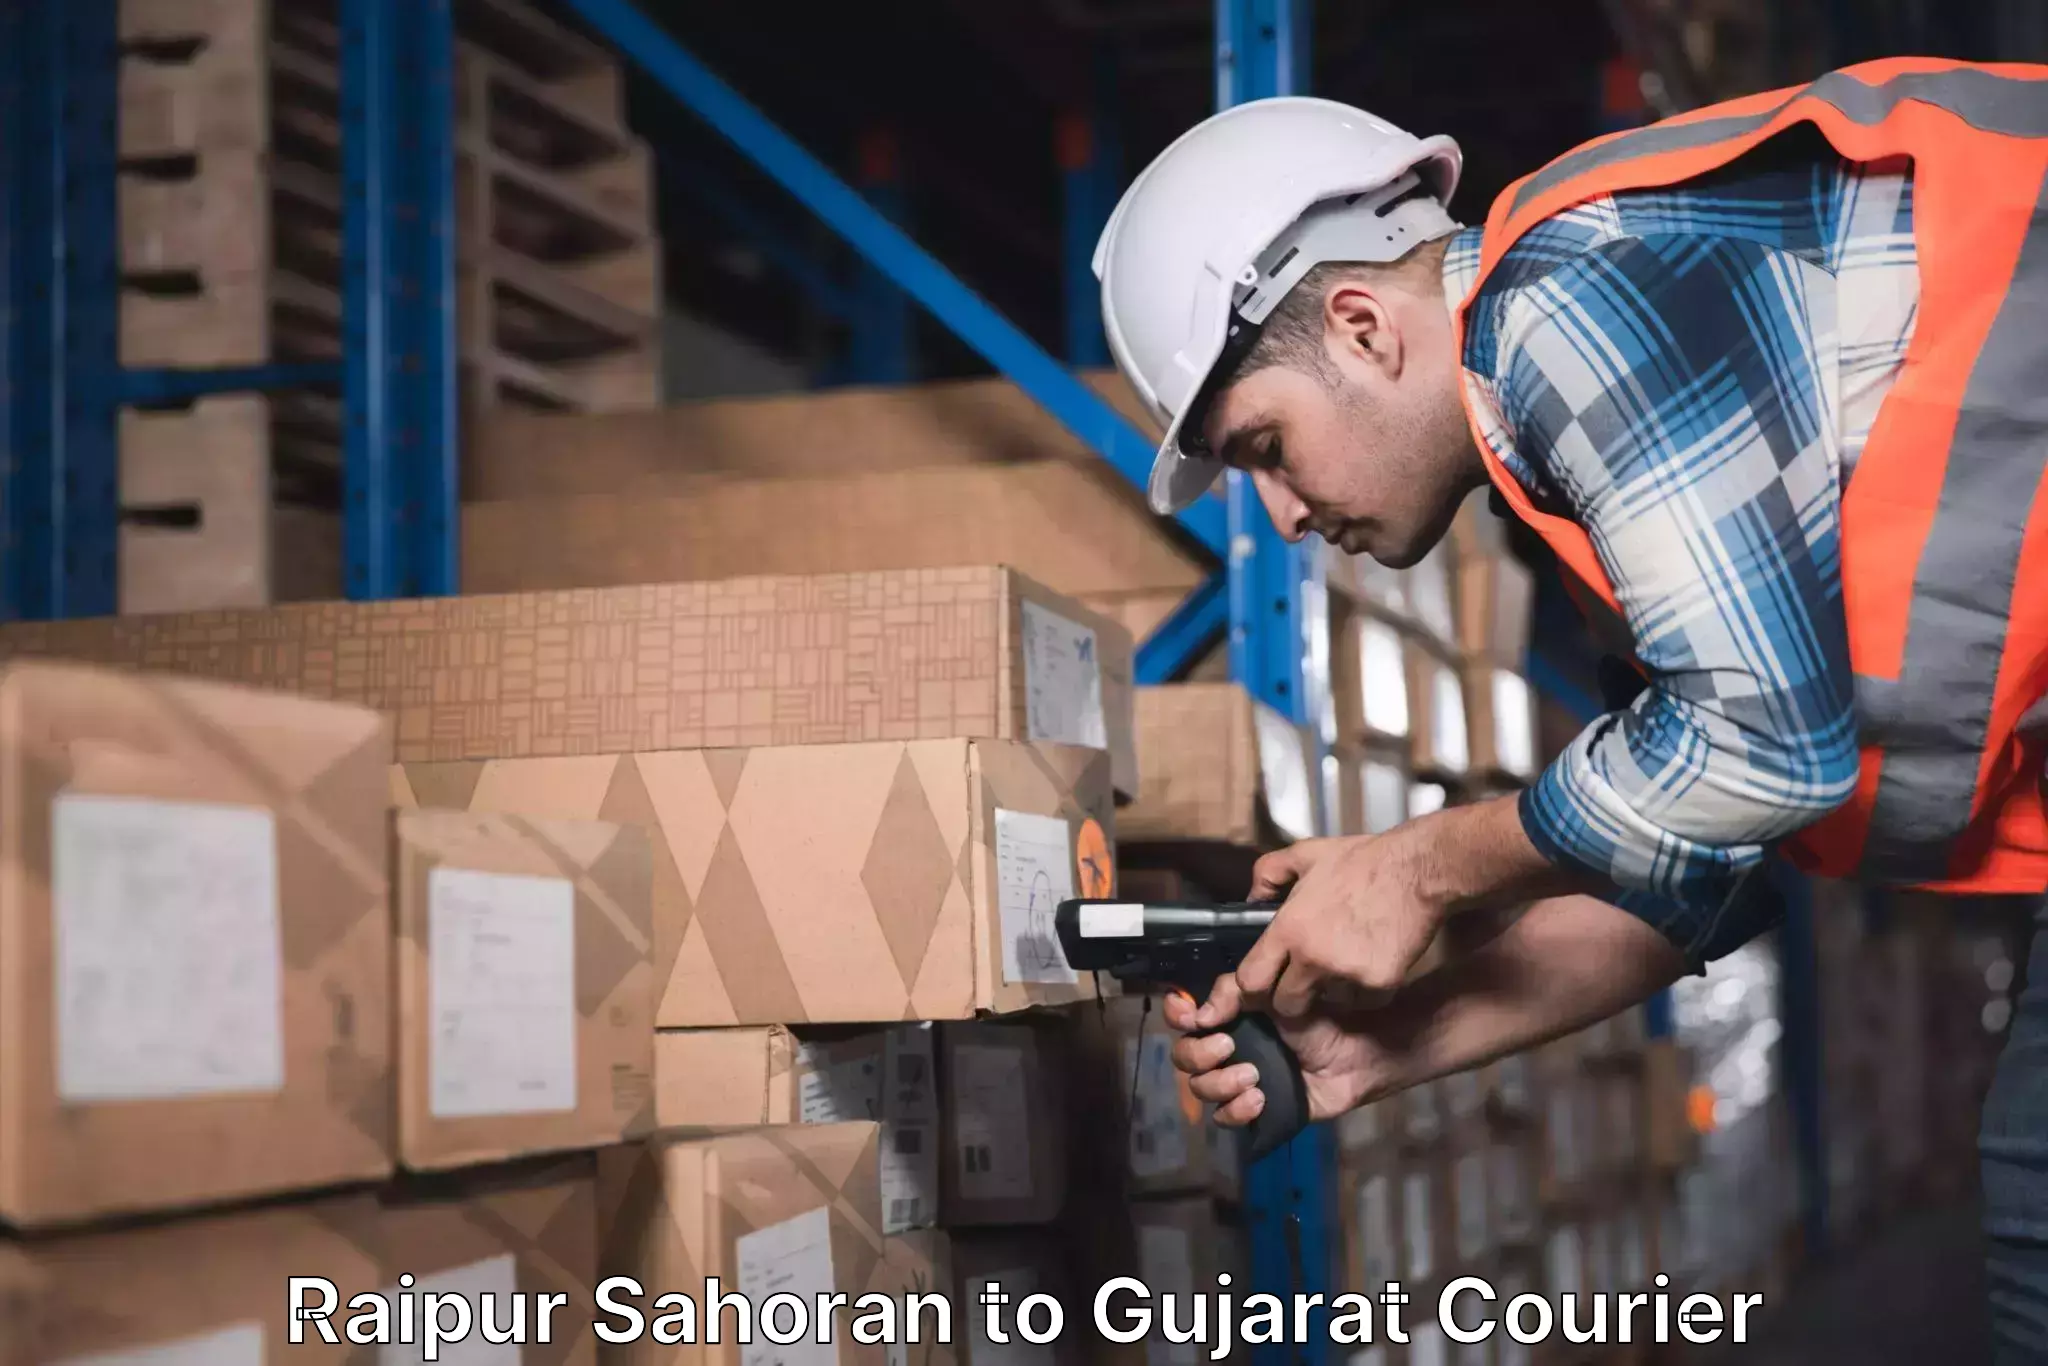 Courier service innovation Raipur Sahoran to Dwarka